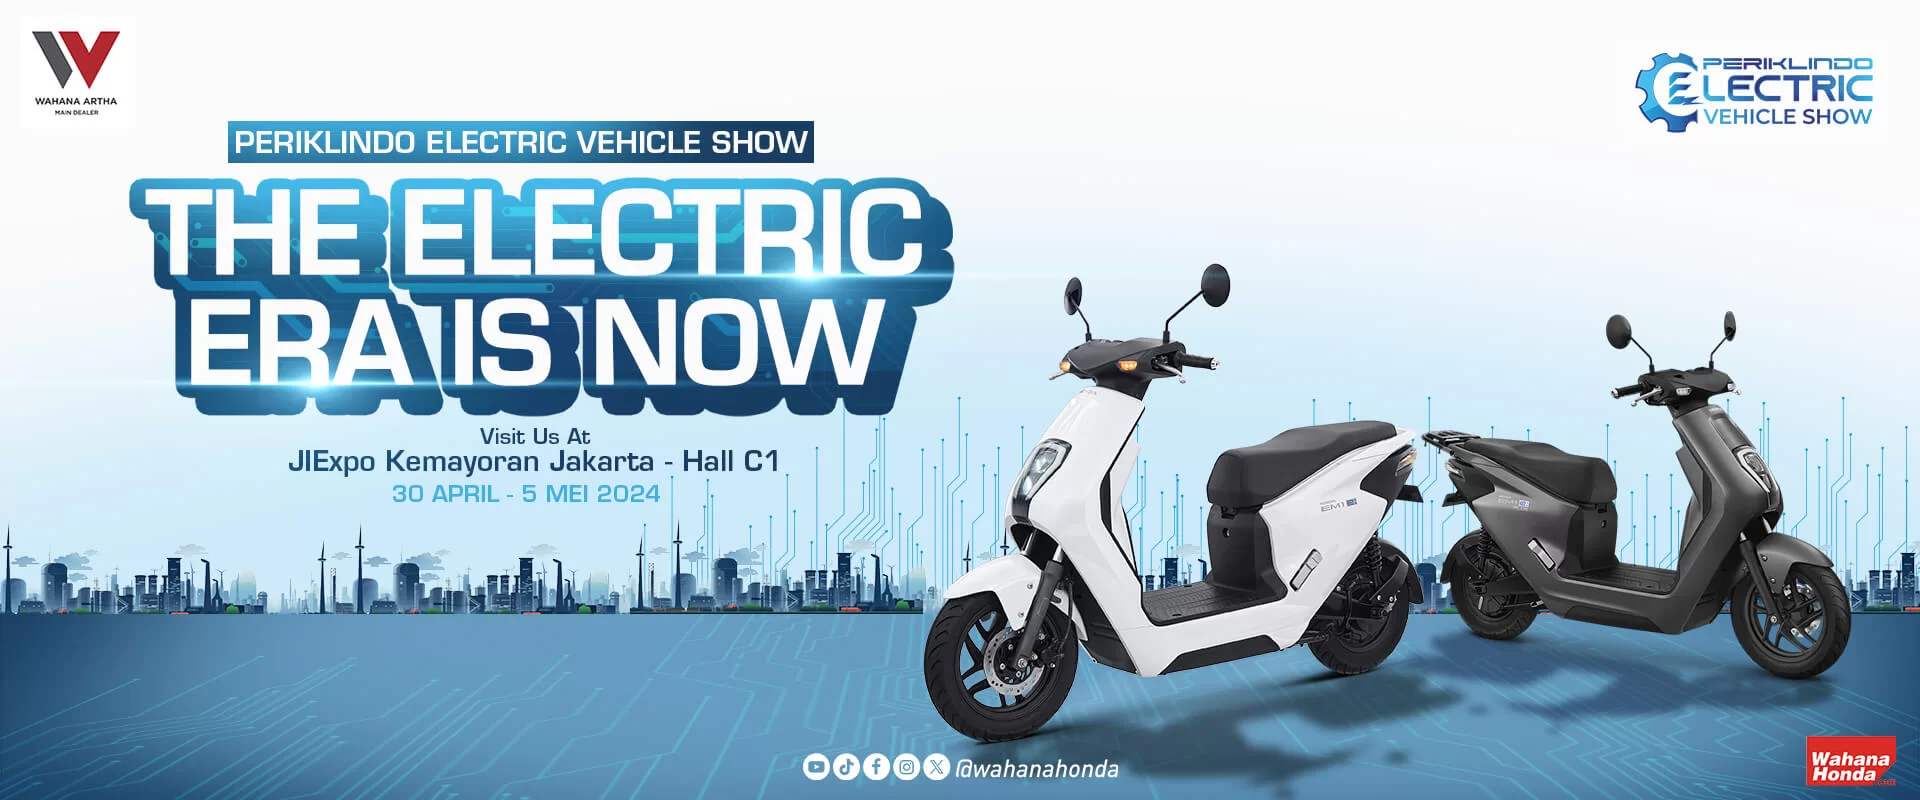 Periklindo Electric Vehicle Show 2024